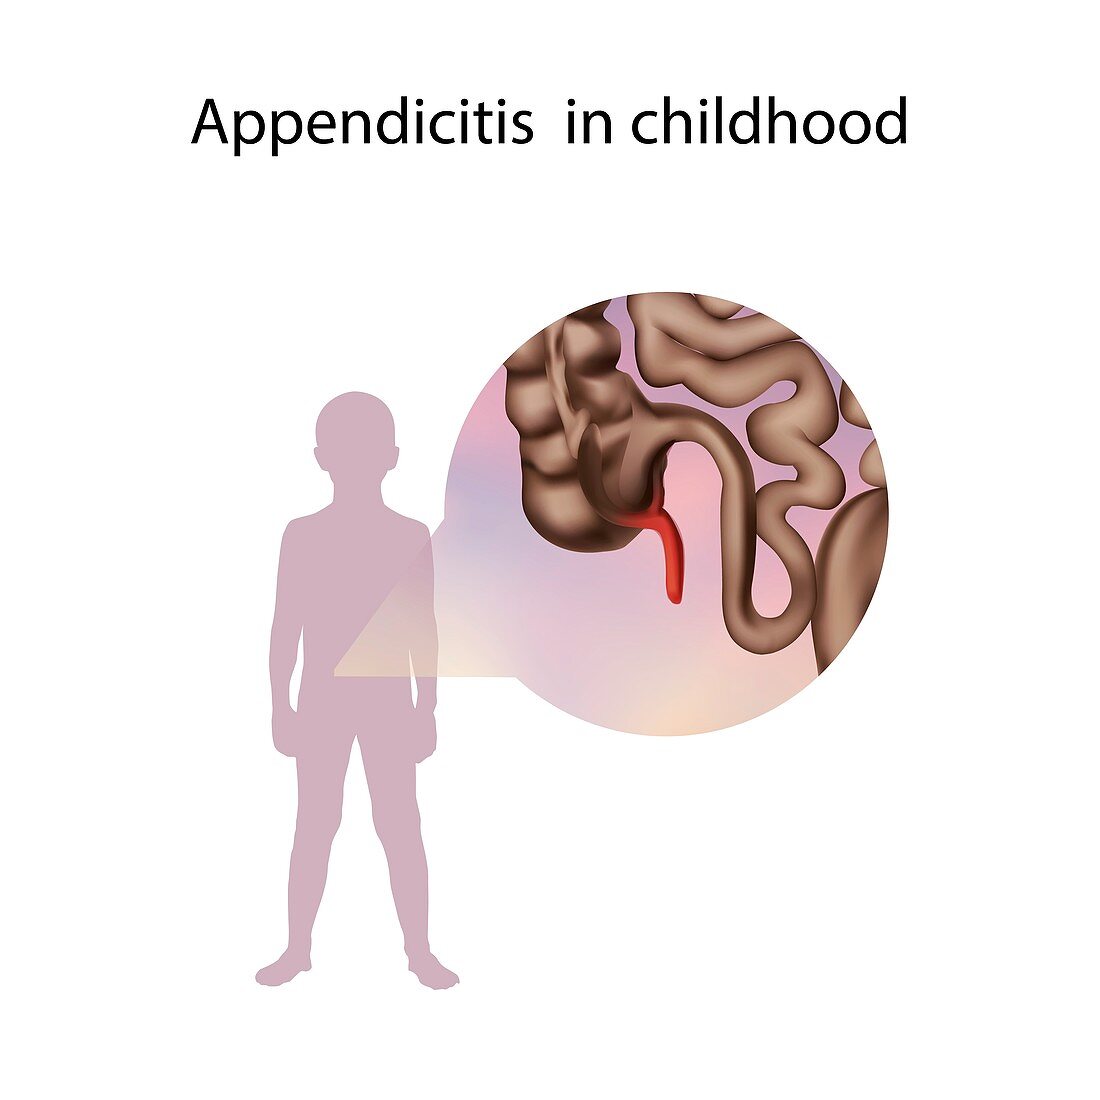 Appendicitis in childhood,illustration